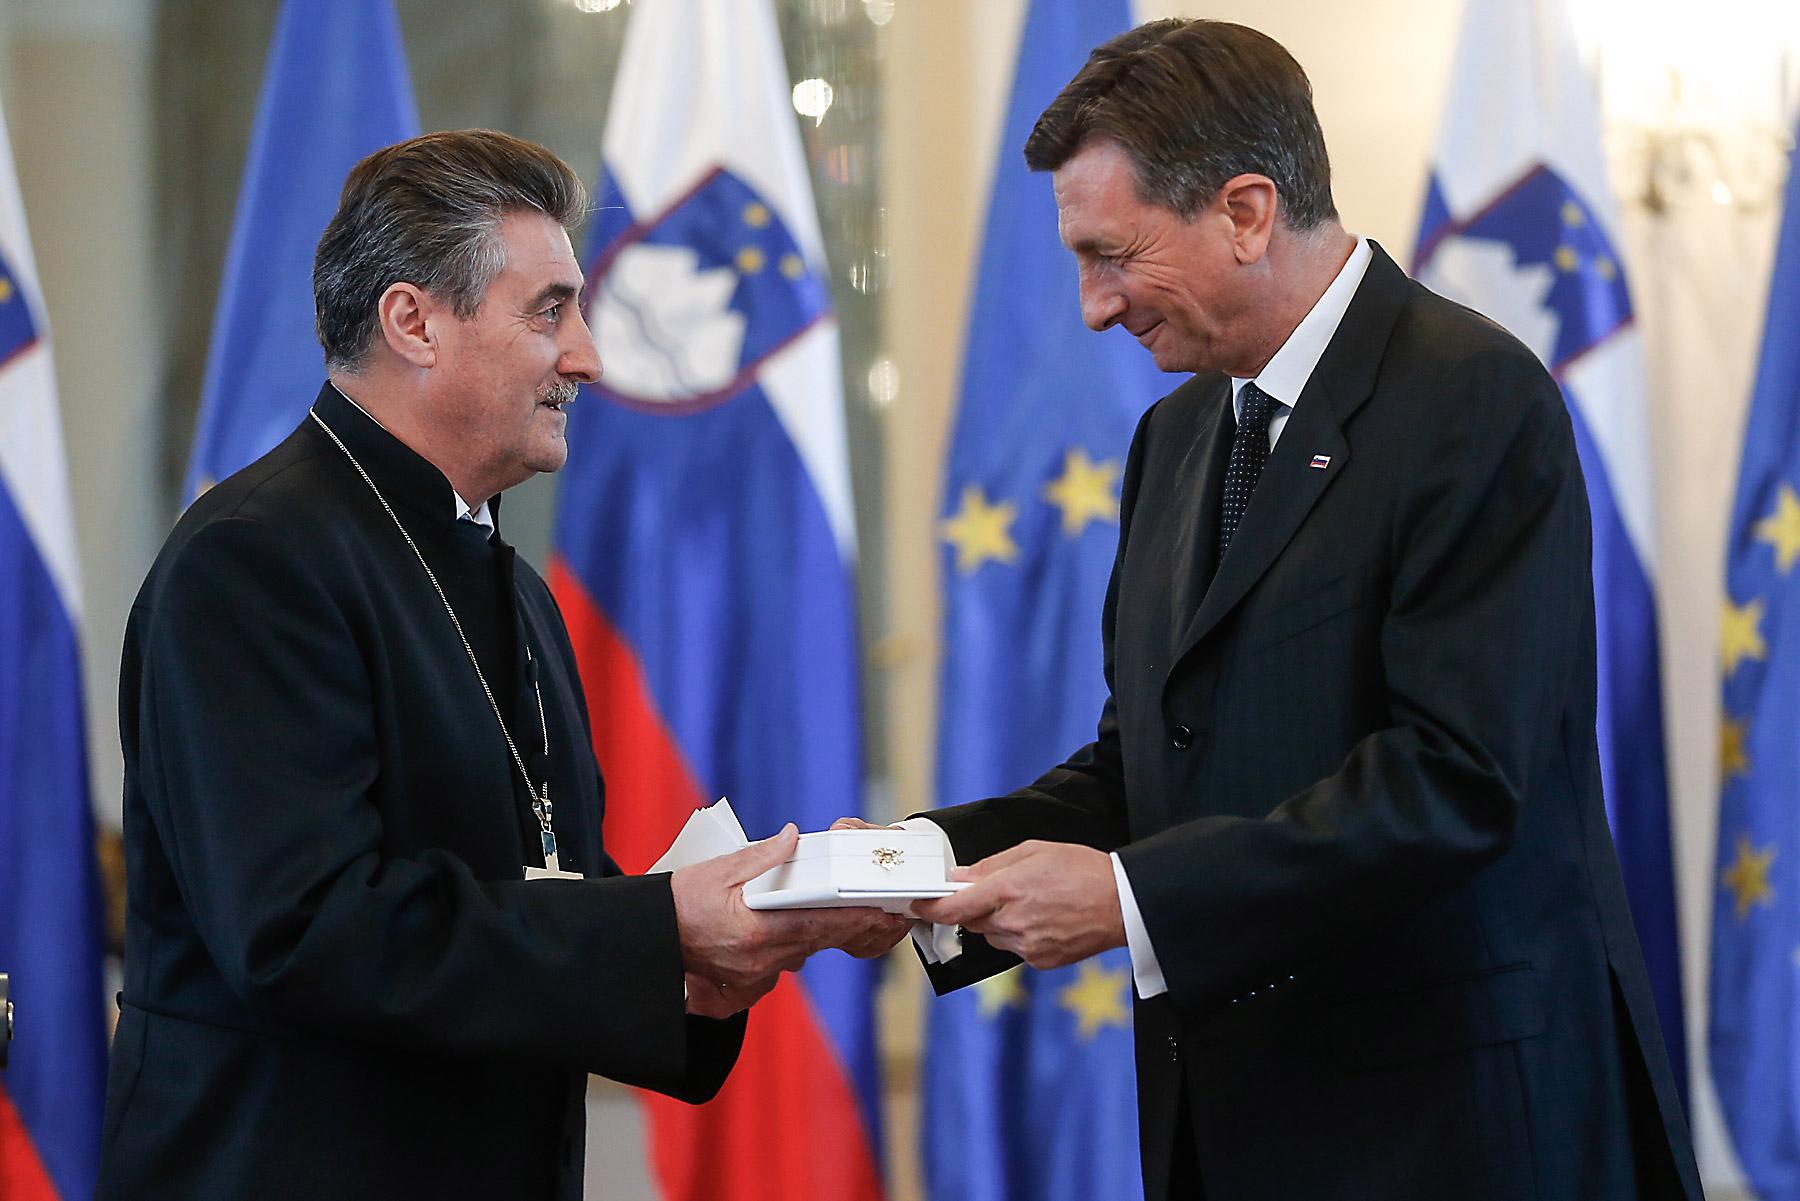 Republic of Slovenia President Borut Pahor awards Bishop ErniÅ¡a the Silver Order of Merit. Photo: Stanko Gruden/STA